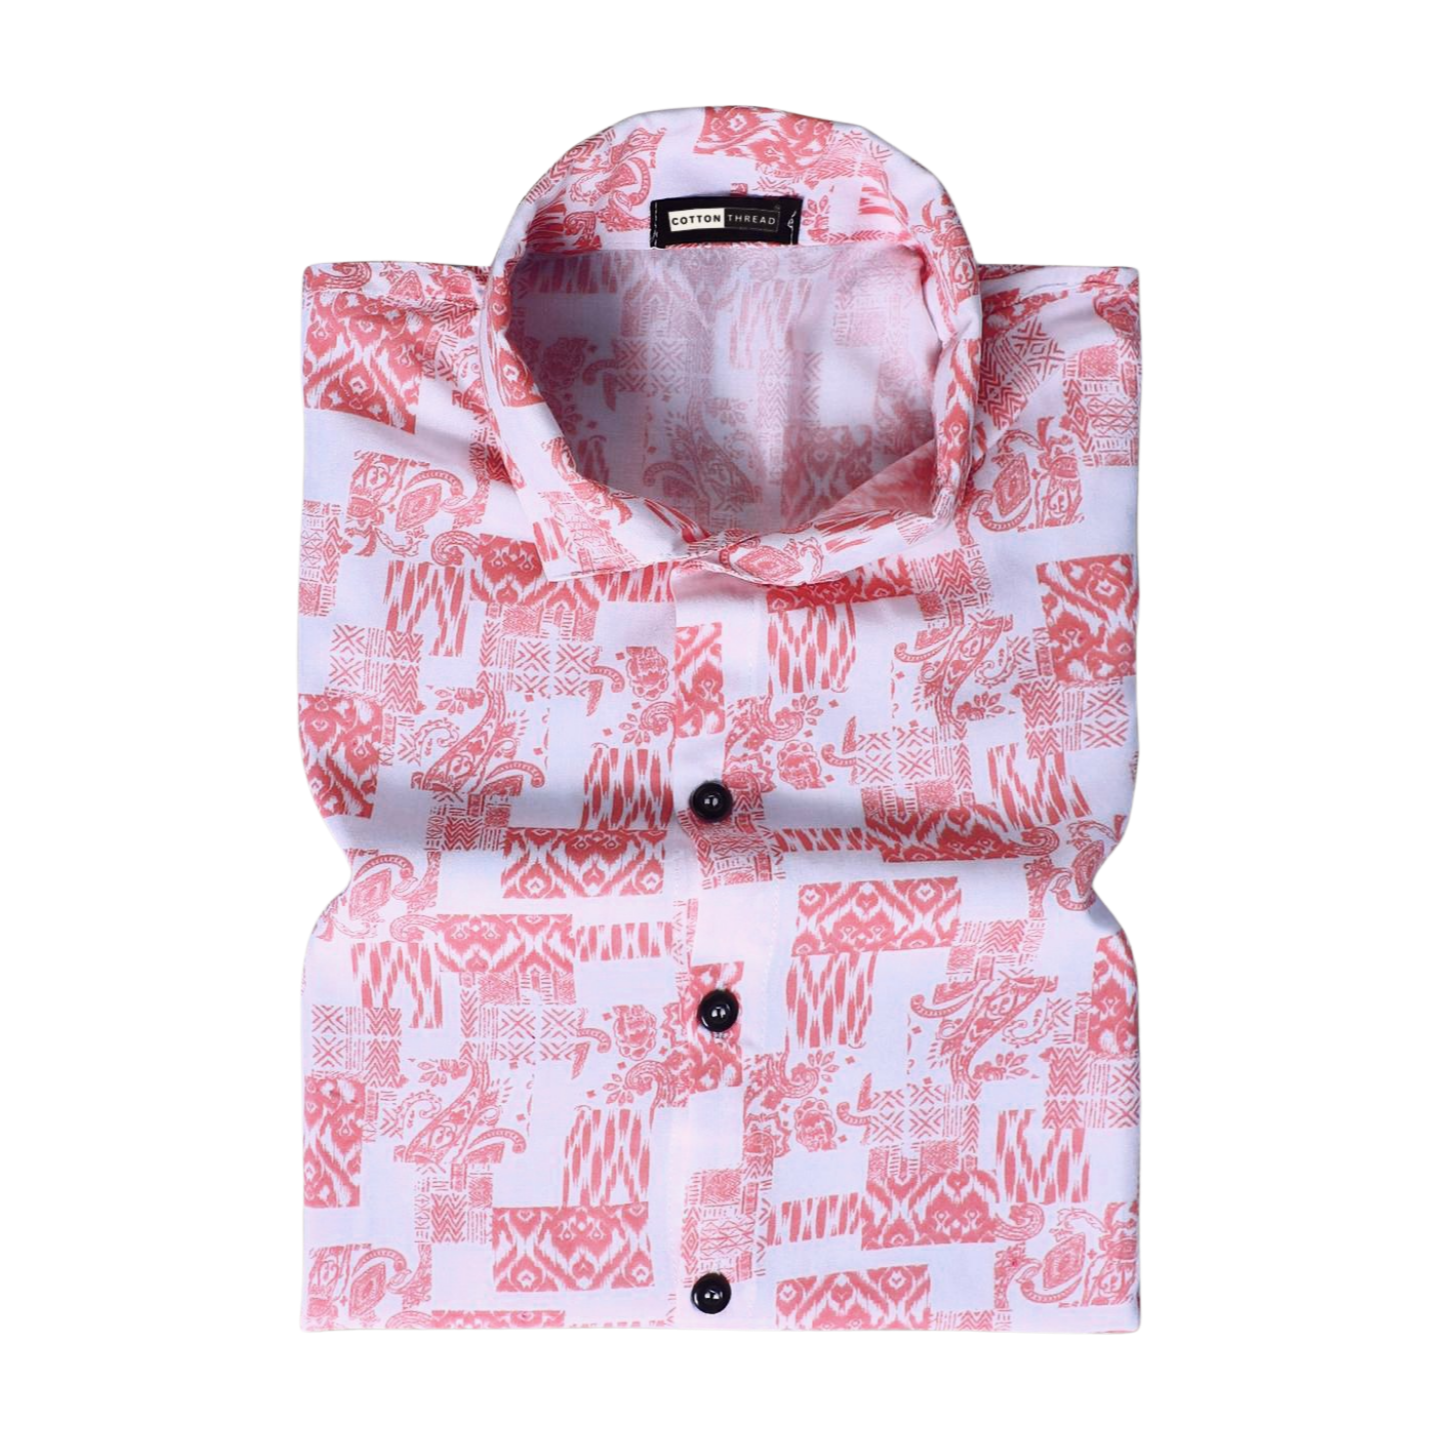 Men's Premium Cotton Full Sleeve Blush Pink Floral Printed Shirt By Cotton Thread (PRT-068)